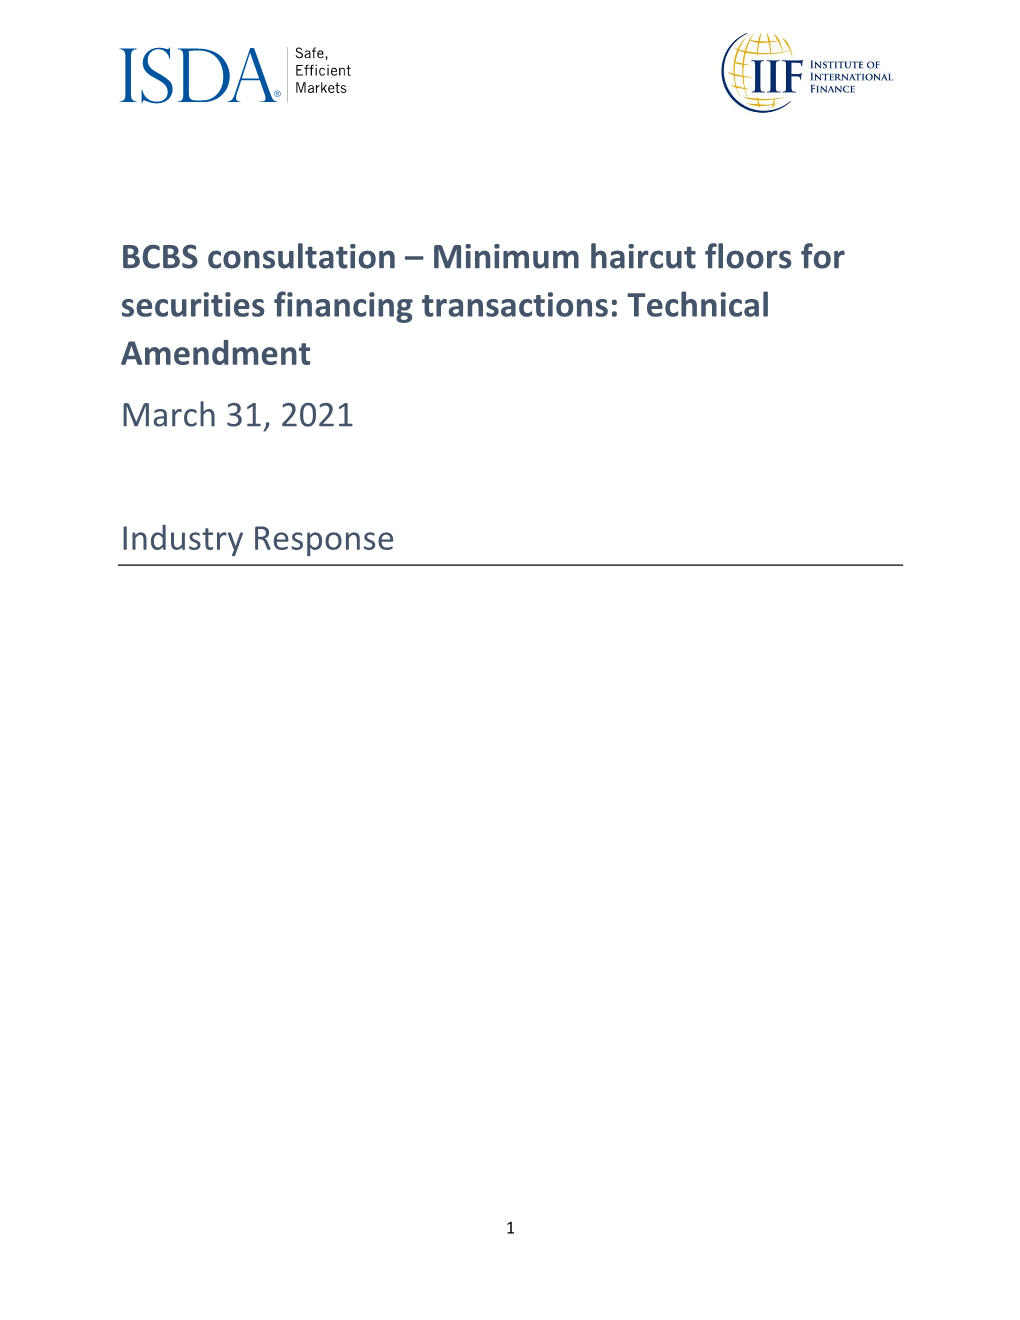 BCBS Consultation – Minimum Haircut Floors for Securities Financing Transactions: Technical Amendment March 31, 2021